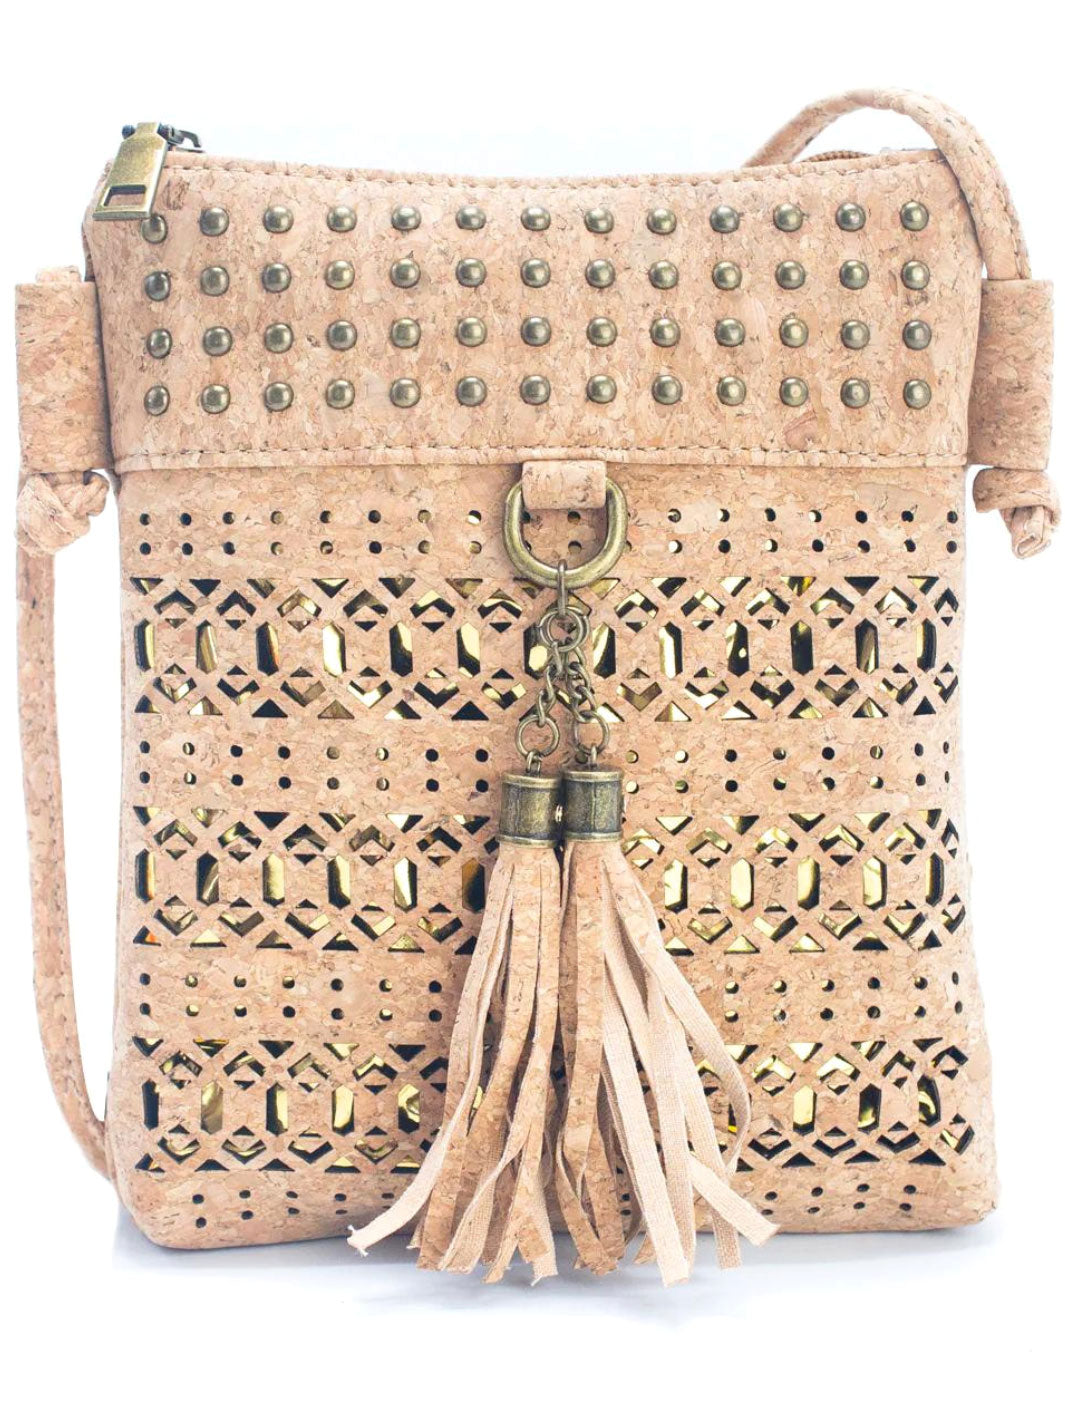 Handmade Natural Cork with Golden Accents - Women's Cork Crossbody Bag